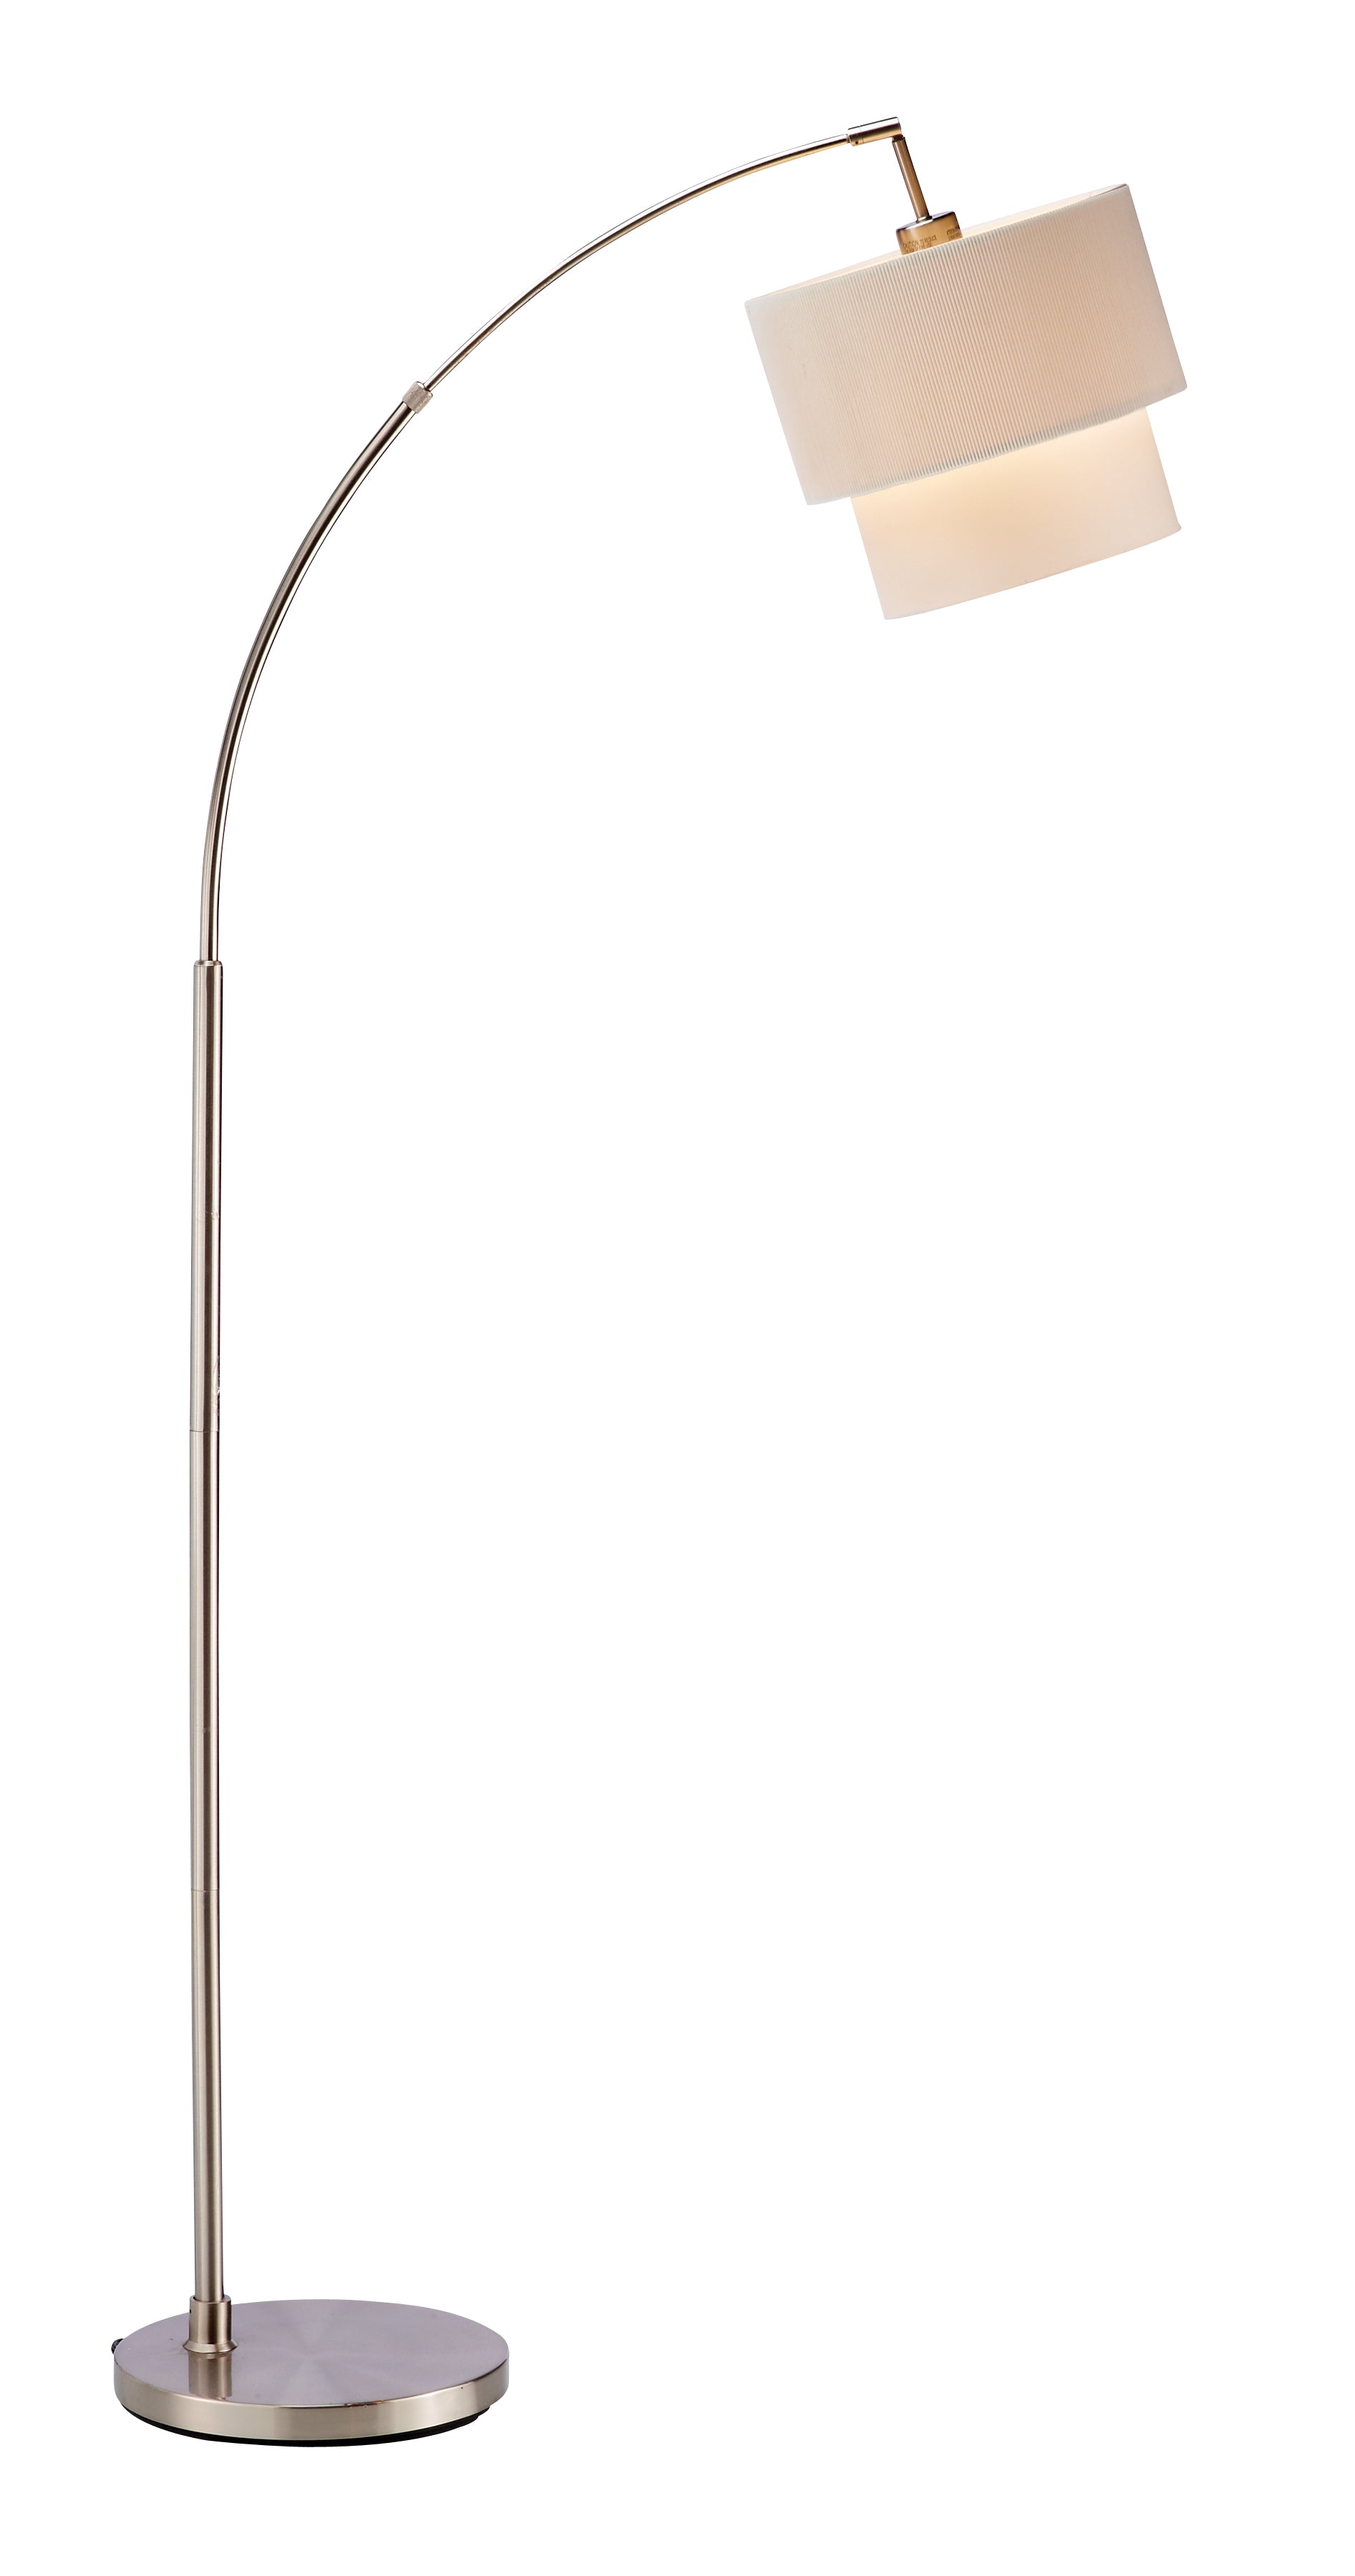 GALA Floor lamp Stainless steel - 3029-12 | ADESSO